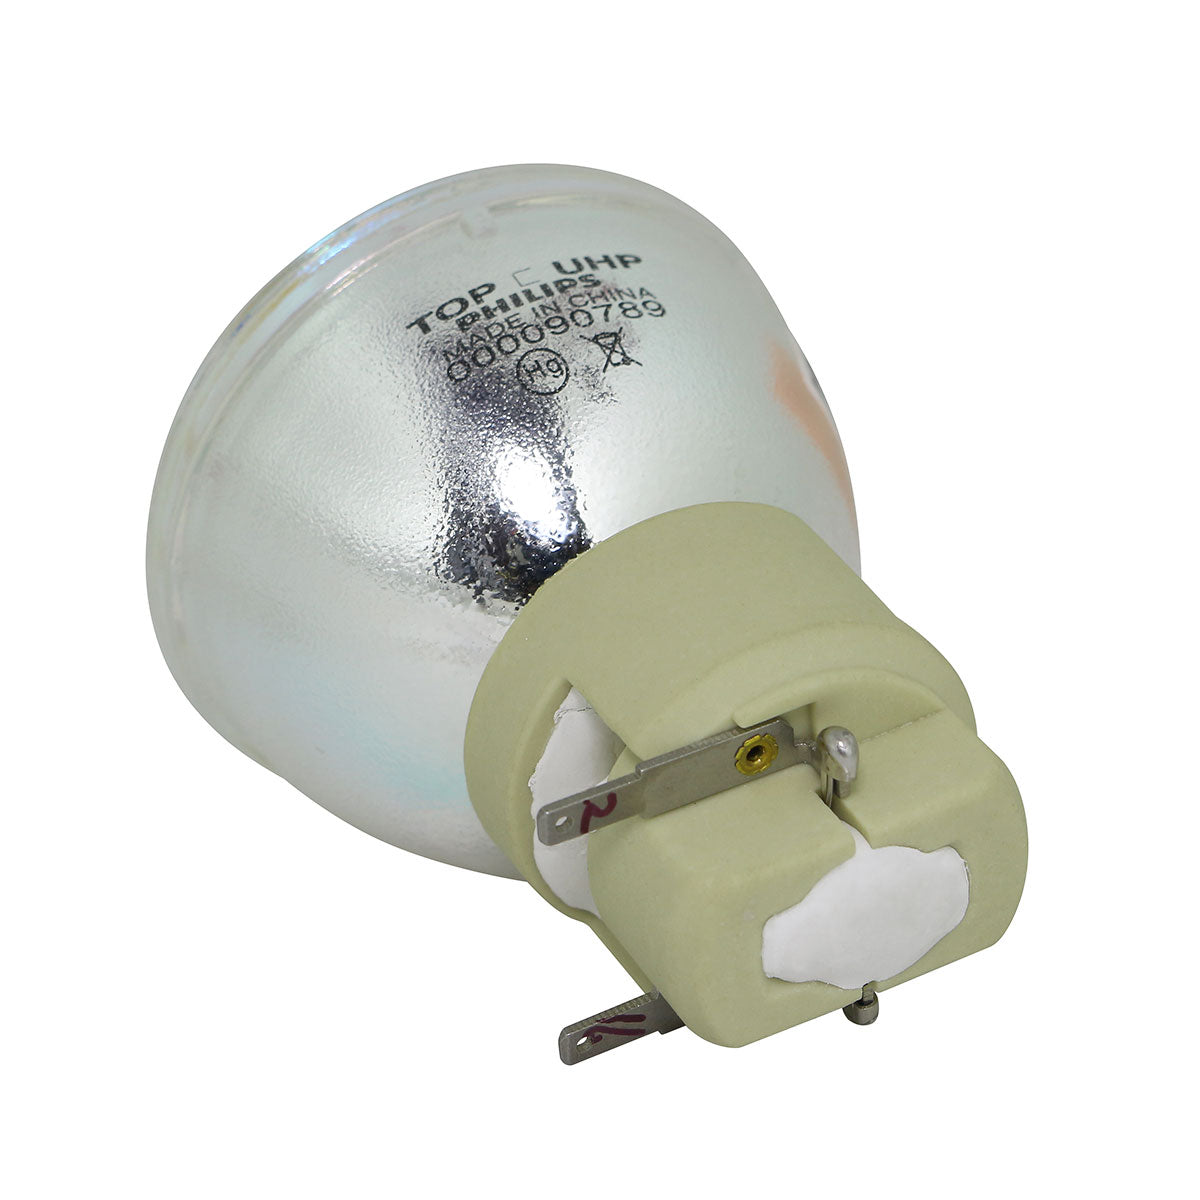 Promethean UST-P1-LAMP Philips Projector Bare Lamp